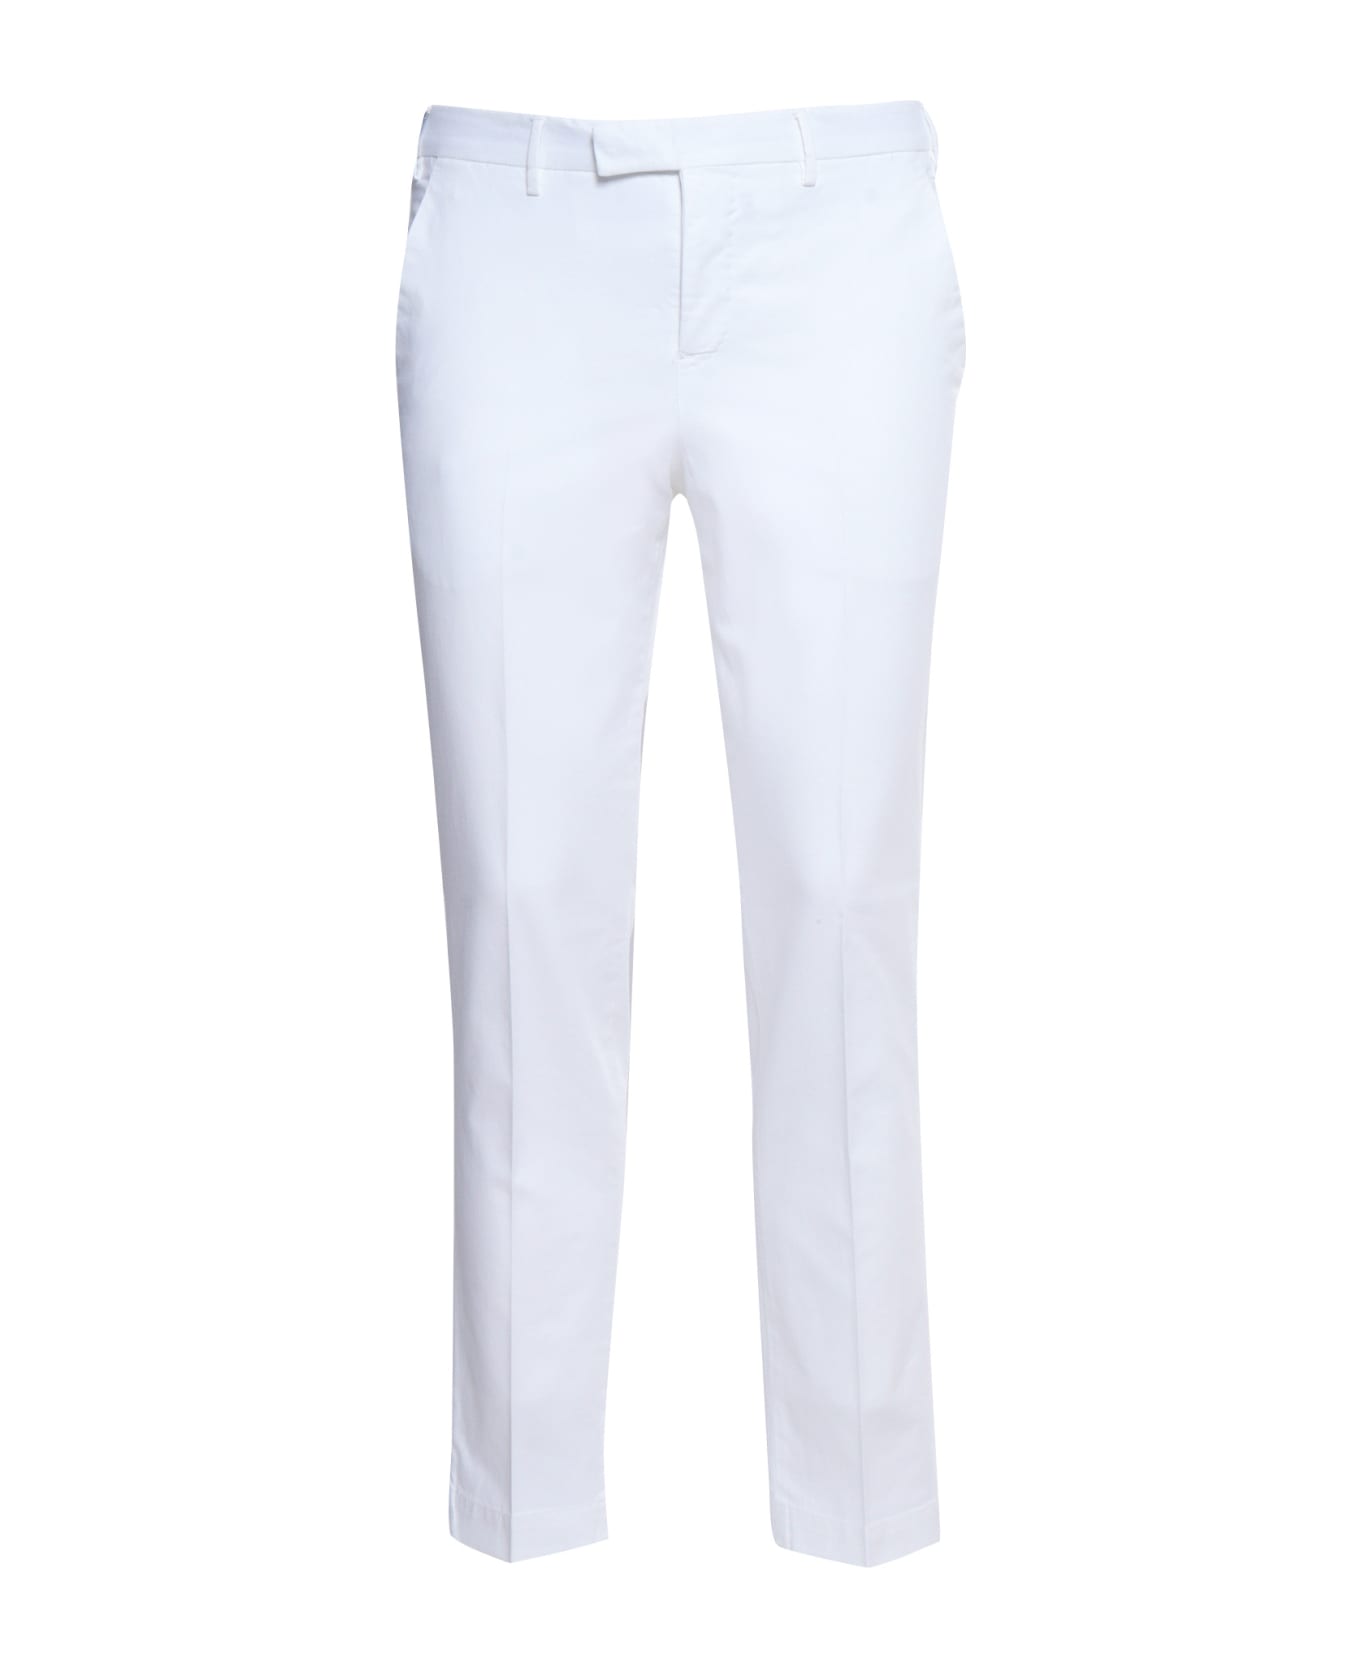 PT Torino White Master Trousers - WHITE